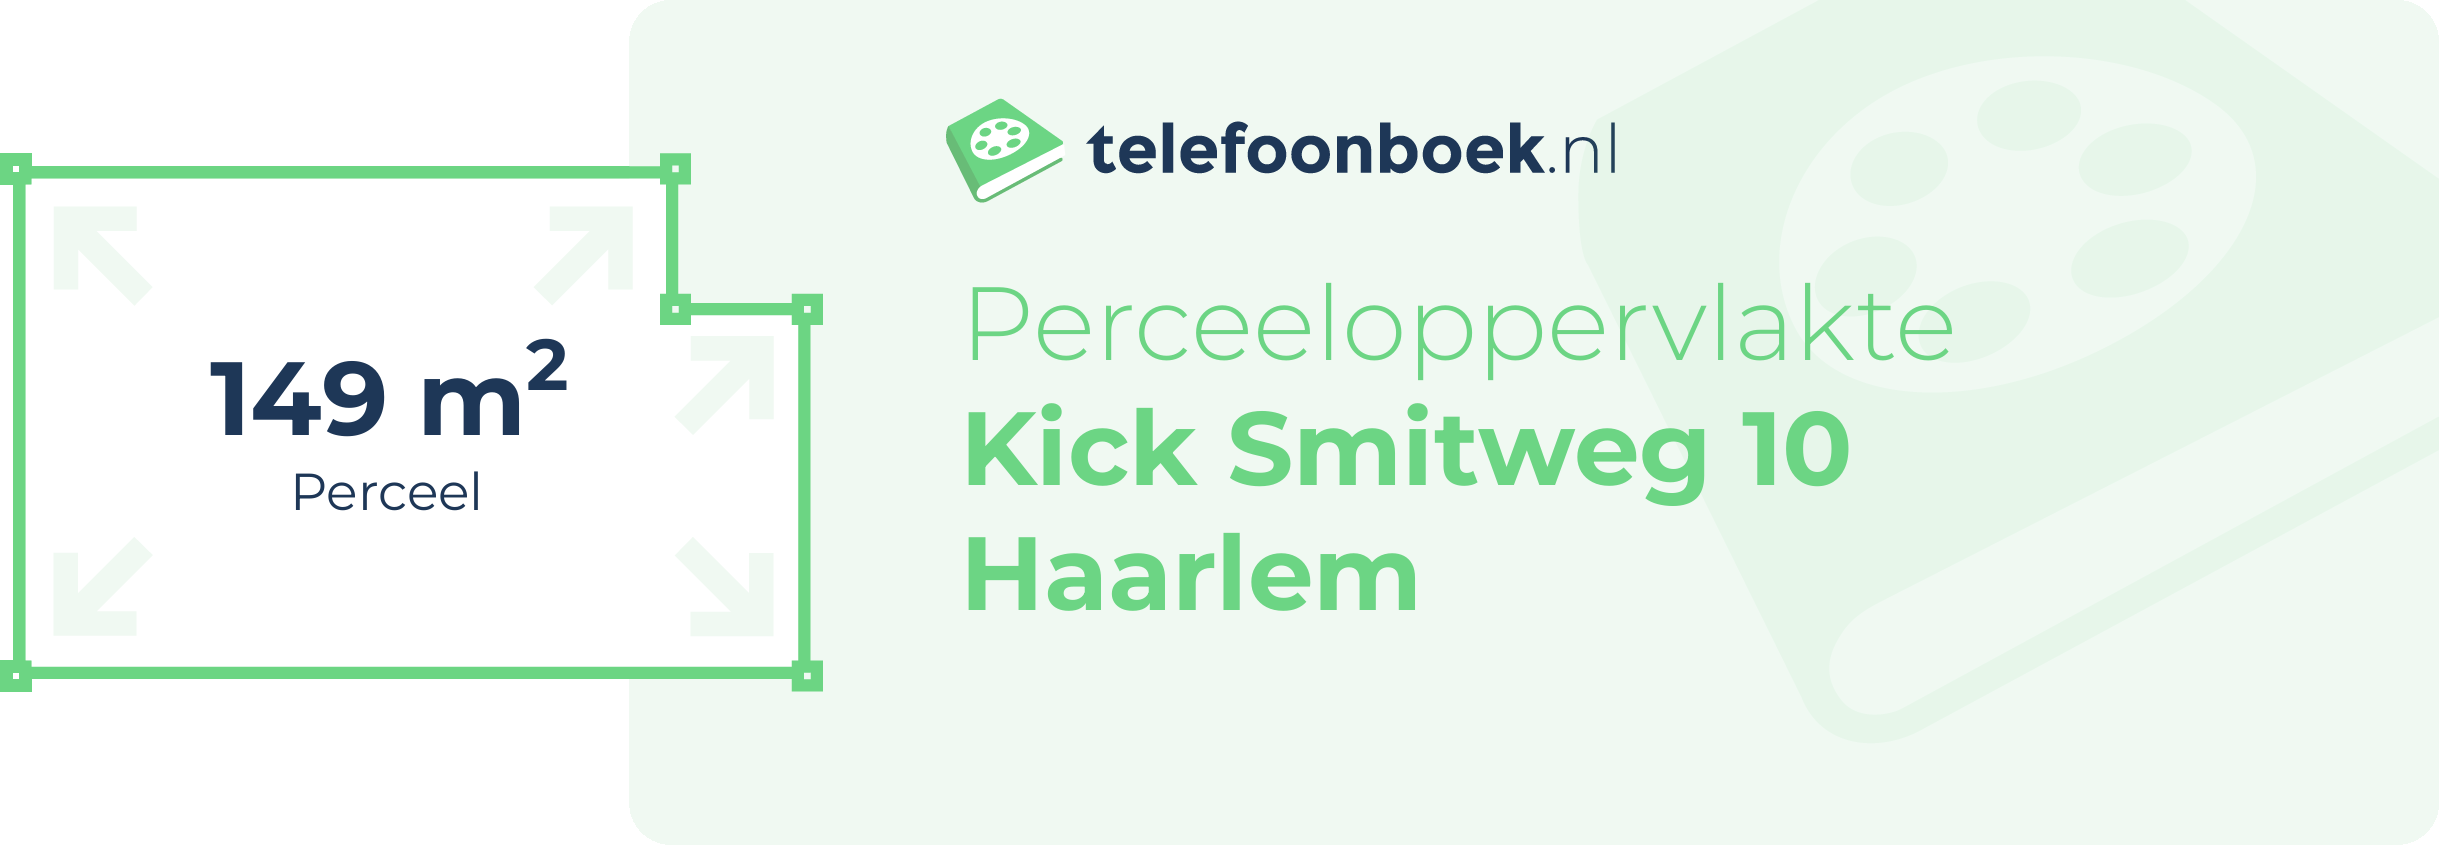 Perceeloppervlakte Kick Smitweg 10 Haarlem